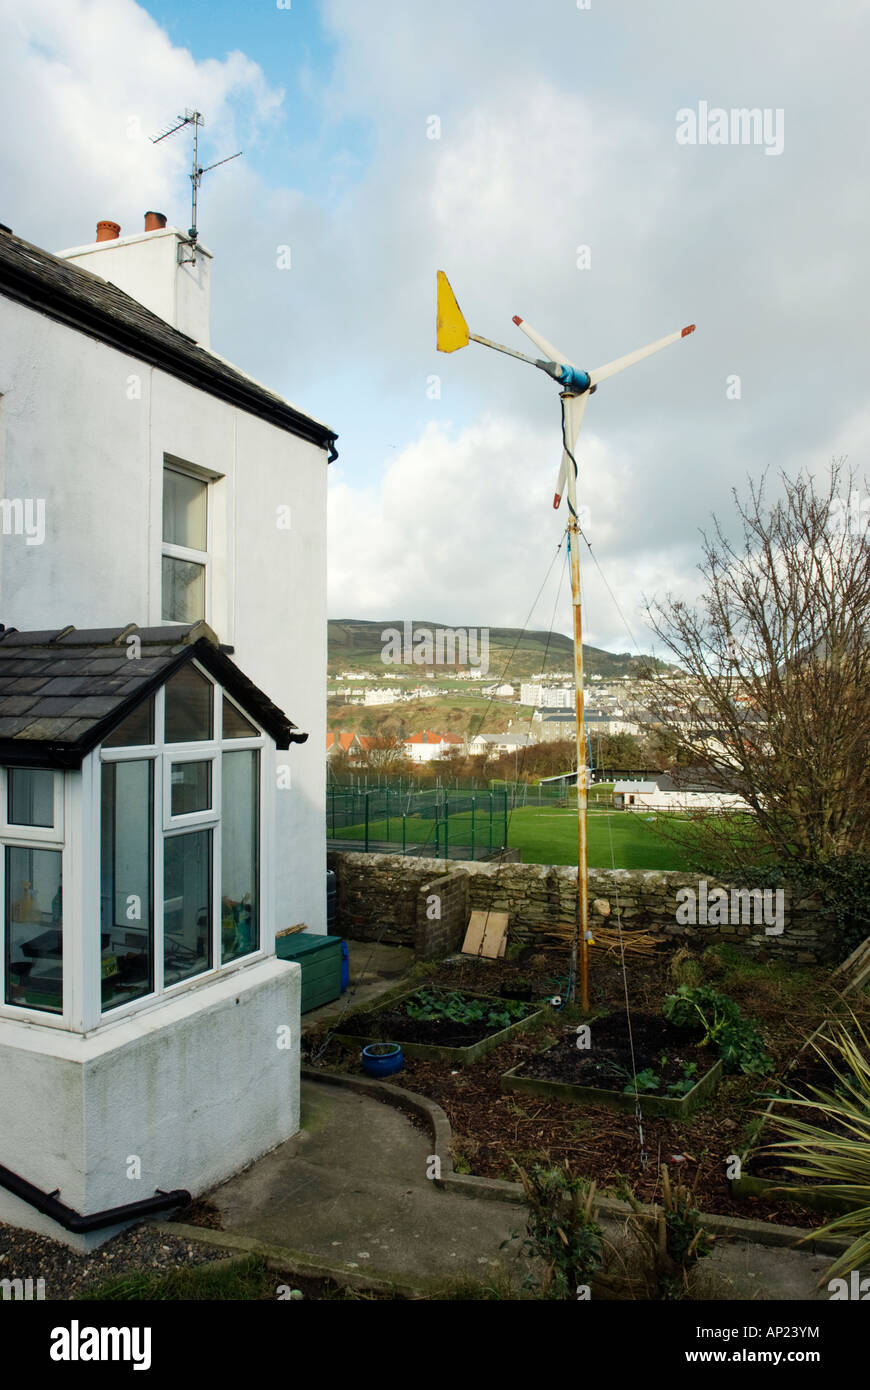 Wind turbine in garden of house Stock Photo